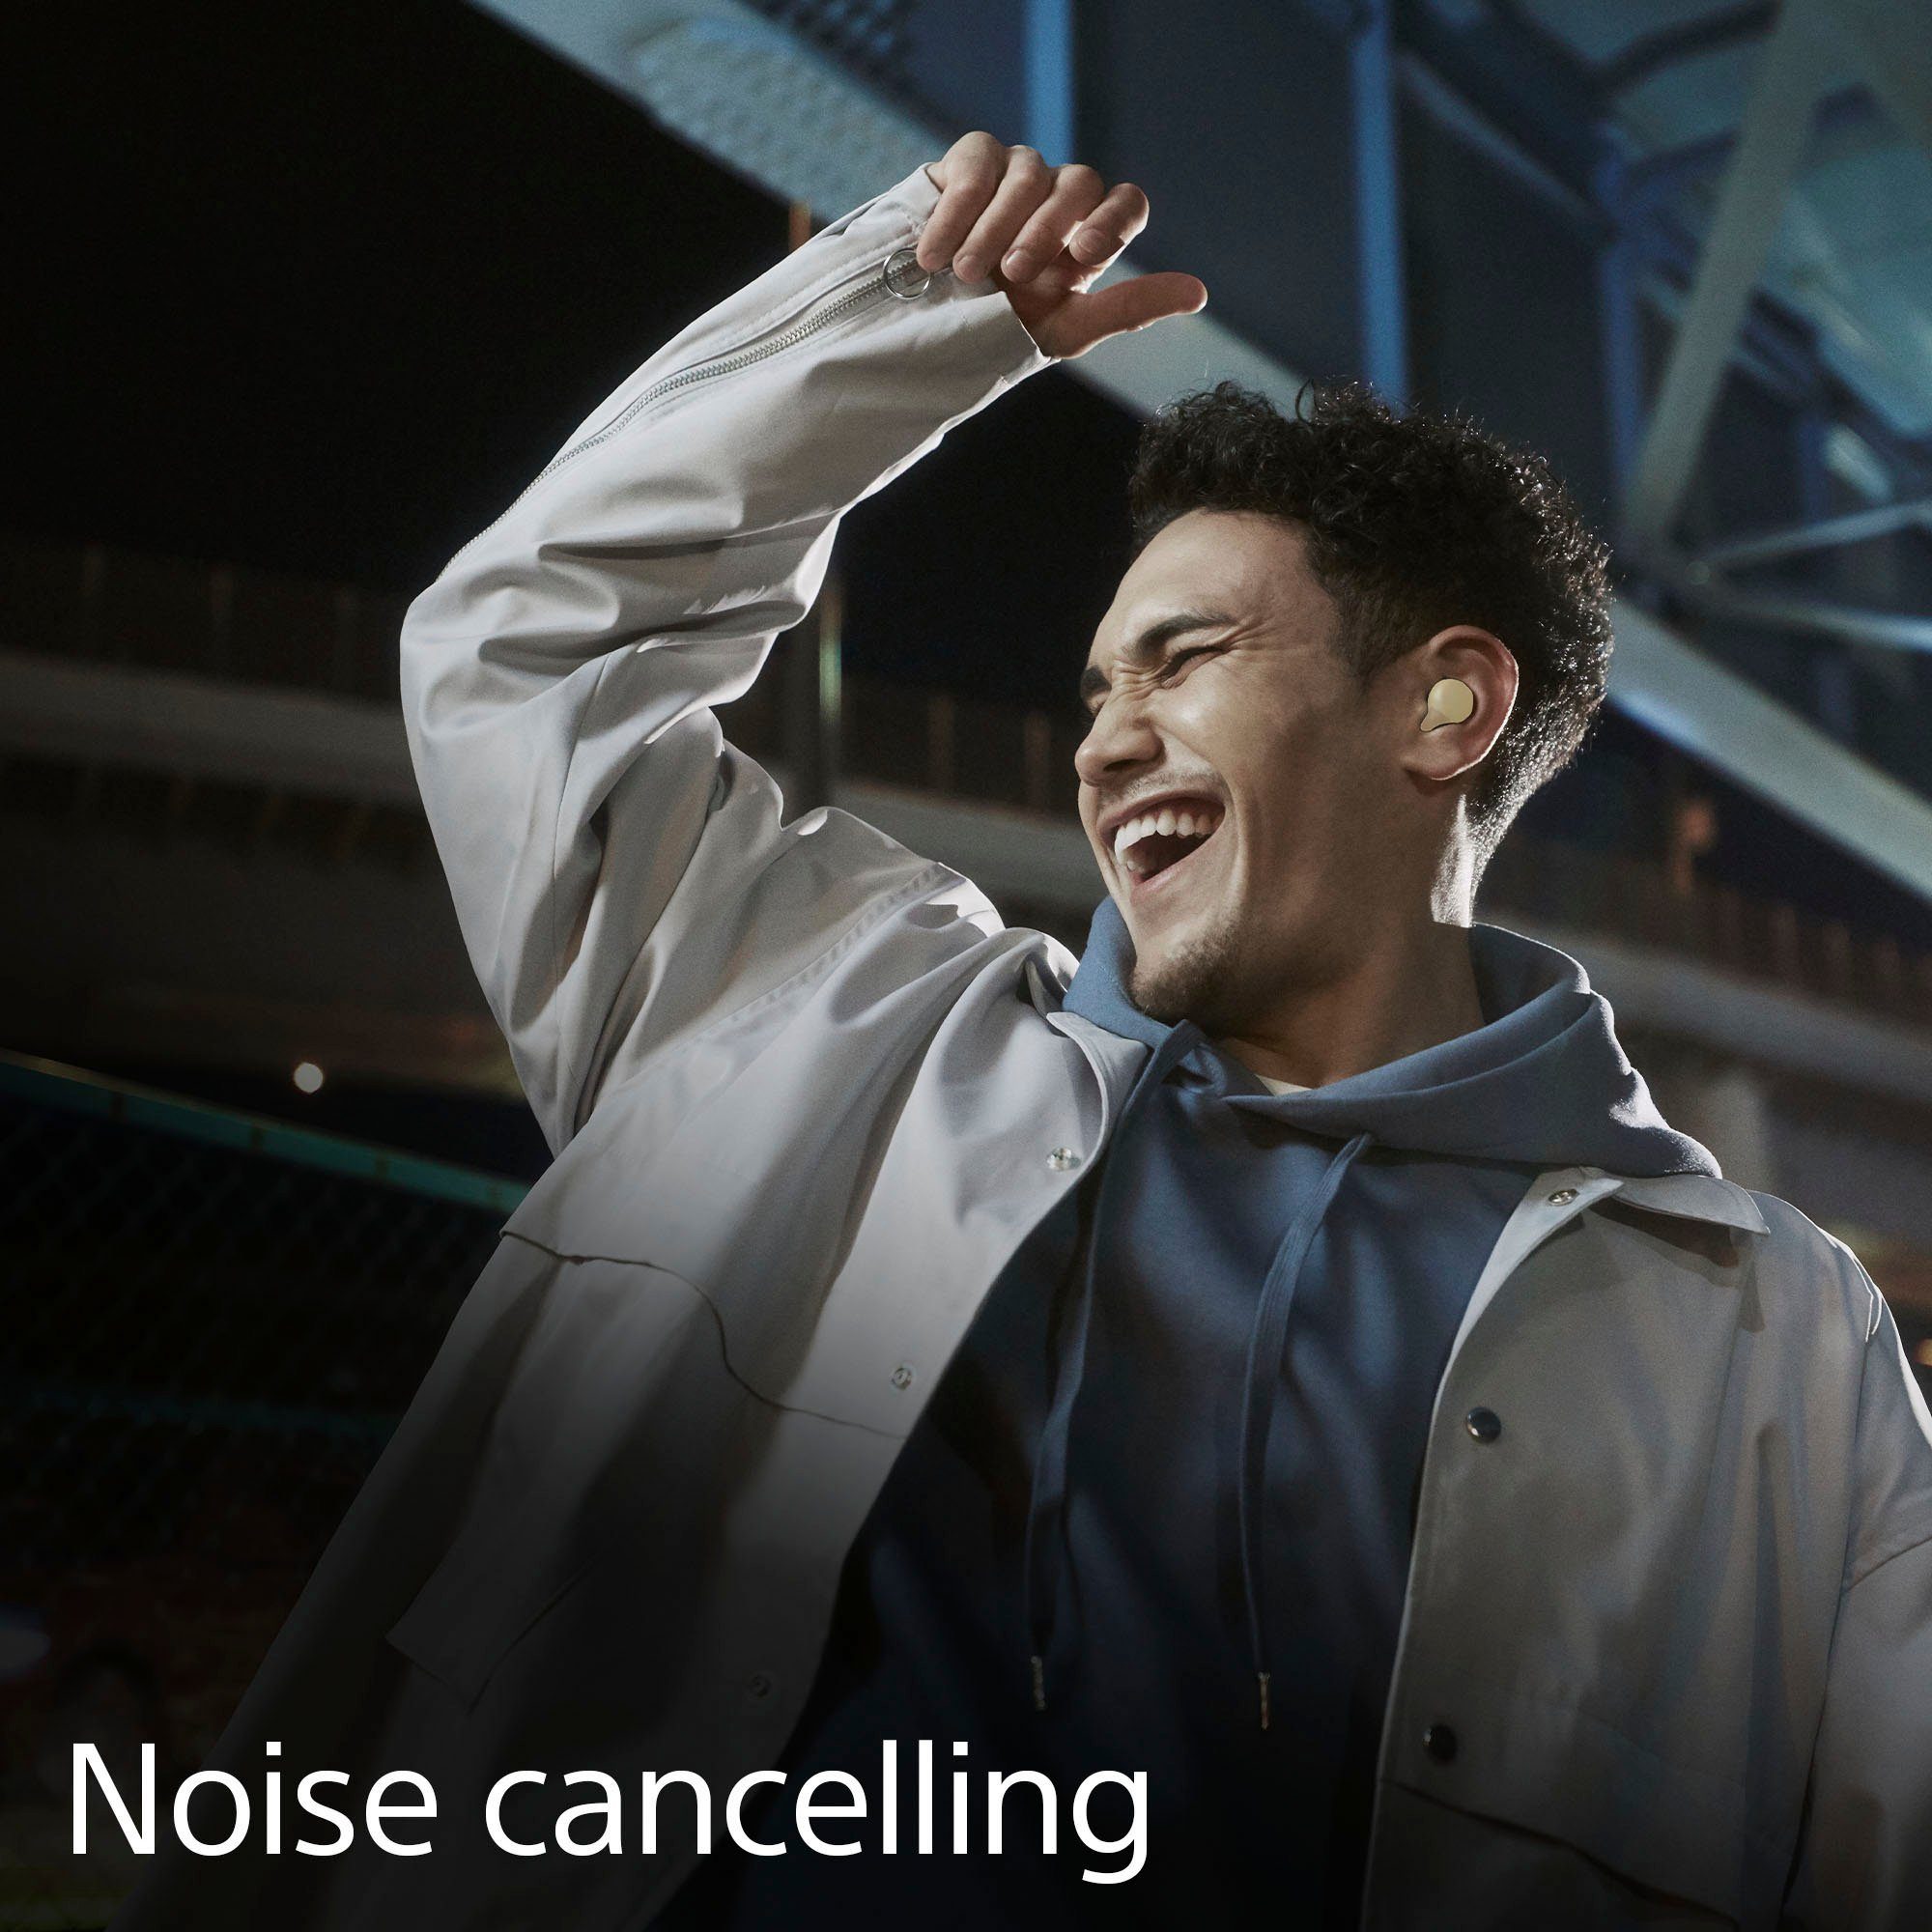 Sony LinkBuds S wireless In-Ear-Kopfhörer 20 NFC, Noise Touch-Steuerung, Ecru st. Cancelling, (Noise-Cancelling, Wireless, Bluetooth, True Akkulaufzeit)